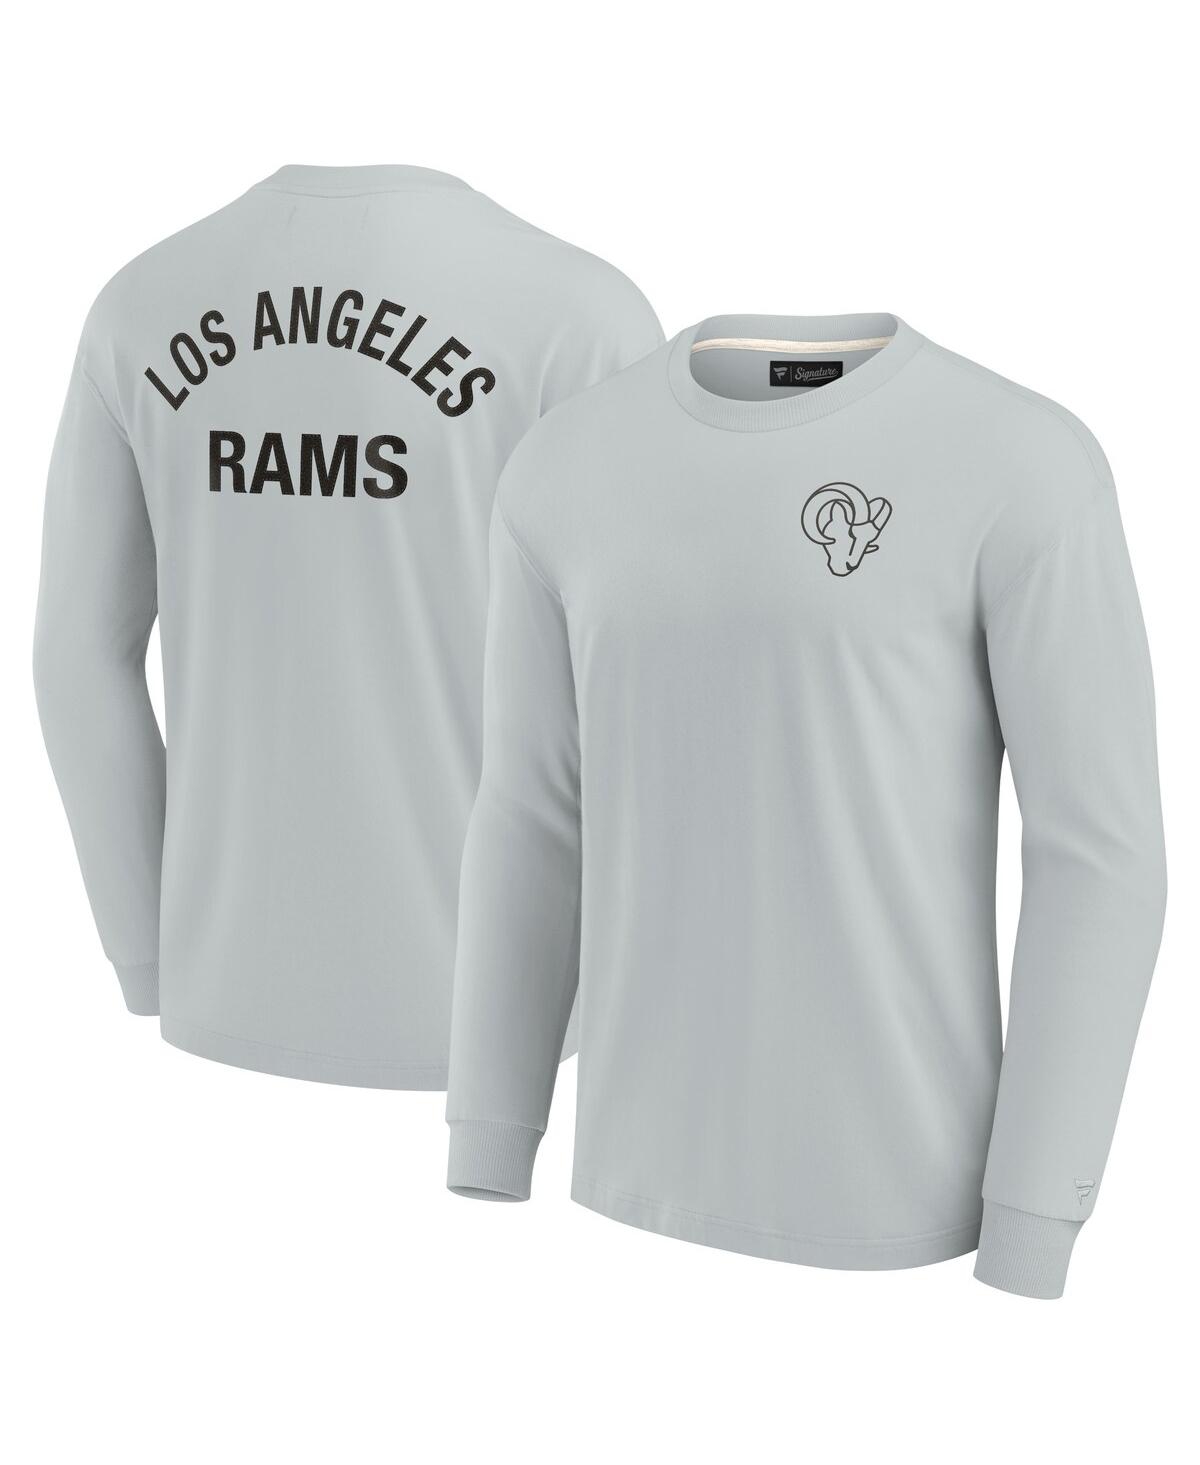 Men's and Women's Fanatics Signature Gray Los Angeles Rams Super Soft Long Sleeve T-shirt - Gray